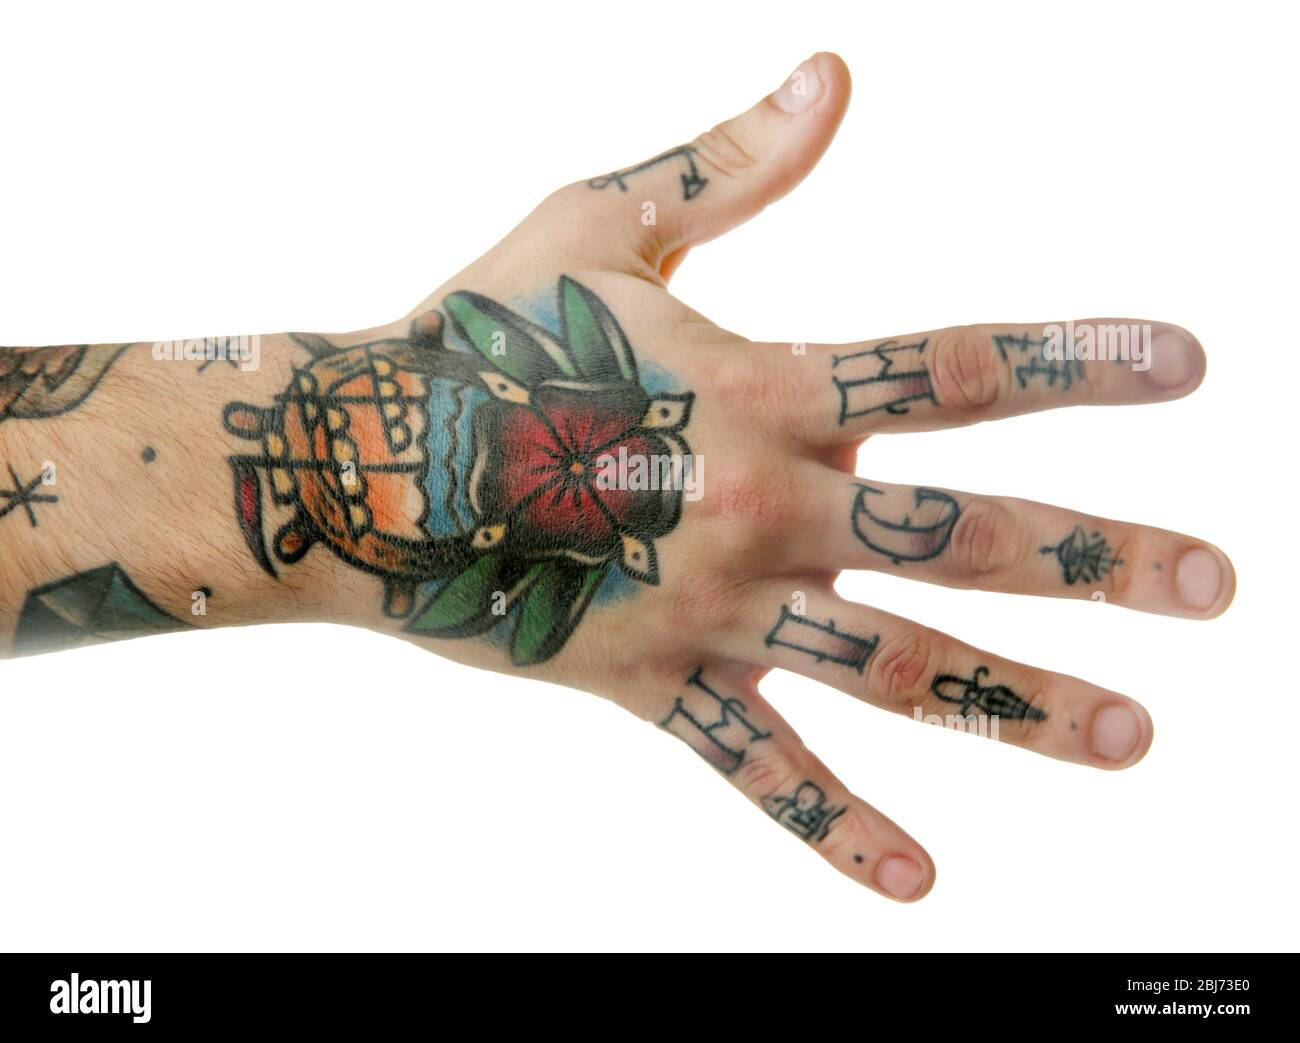 Some finger tattoos. Thank you Chris. • #fingertattoos #fingertattoo  #tinytattoos #tinytattoo #handtattoos | Instagram